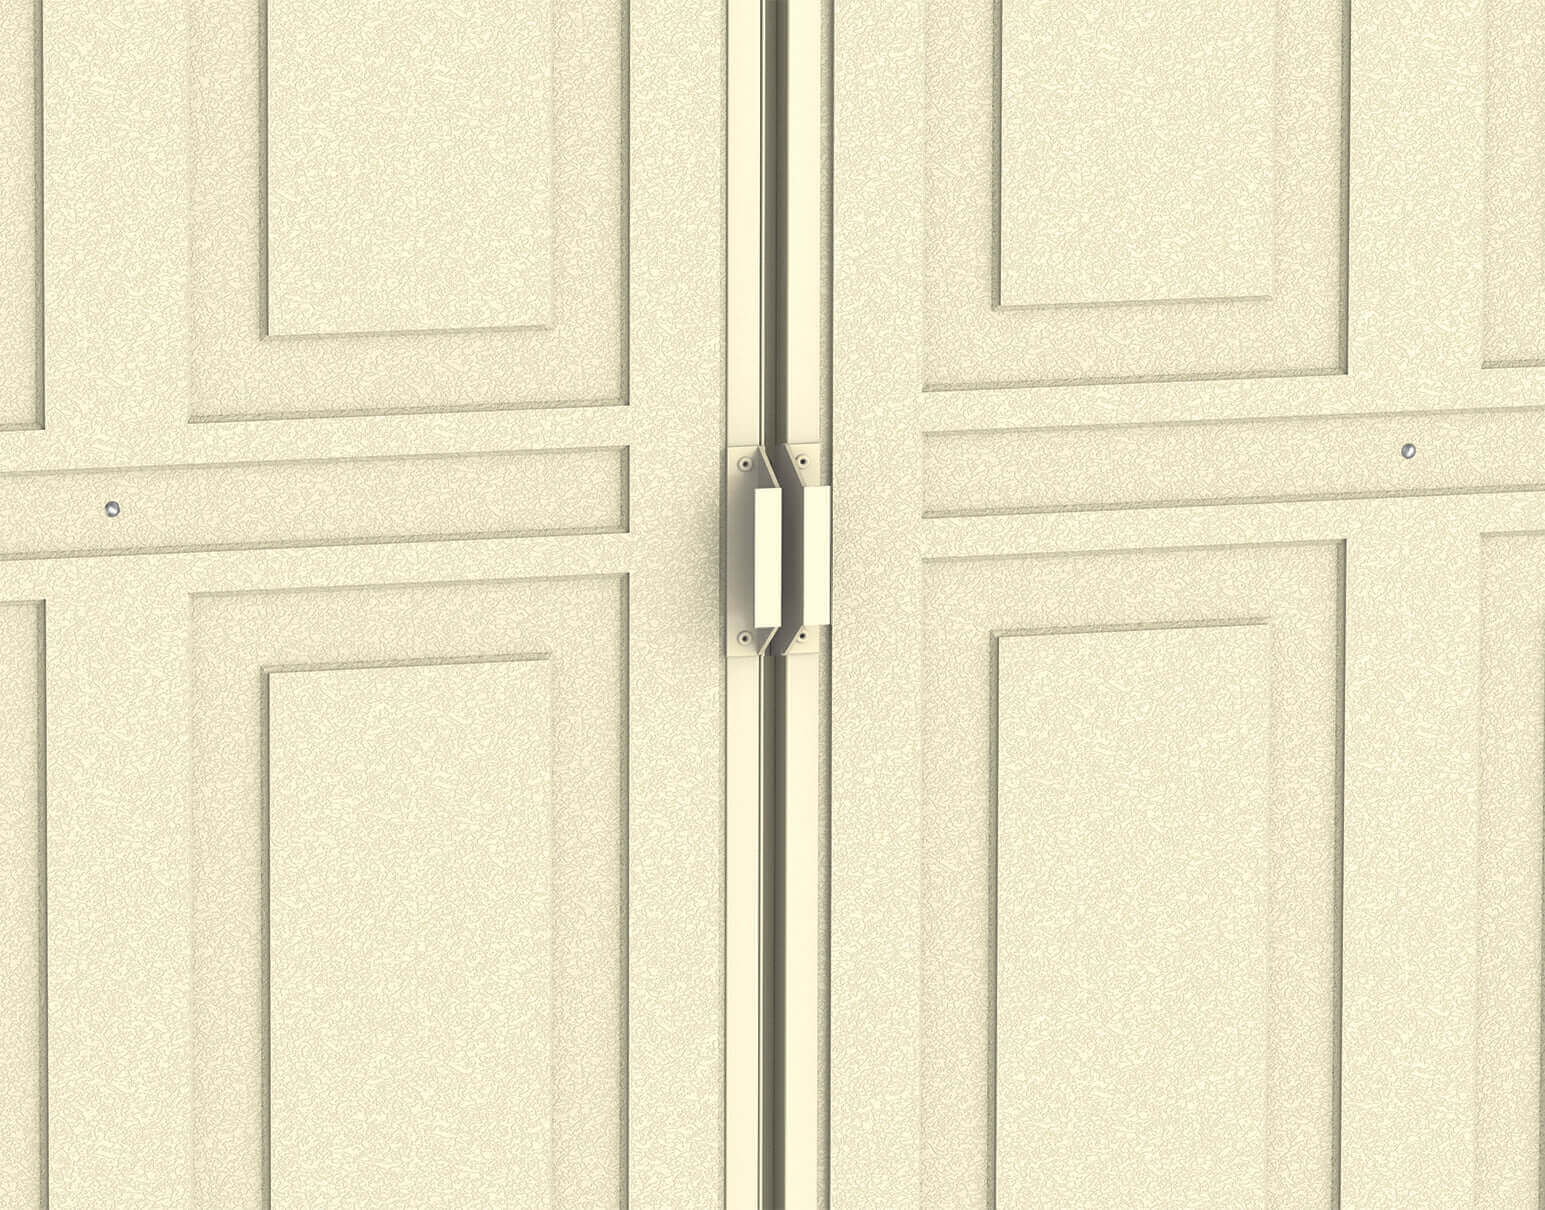 Duramax 10.5' x 5.0' Woodbridge with Foundation 00283 Front view of doors